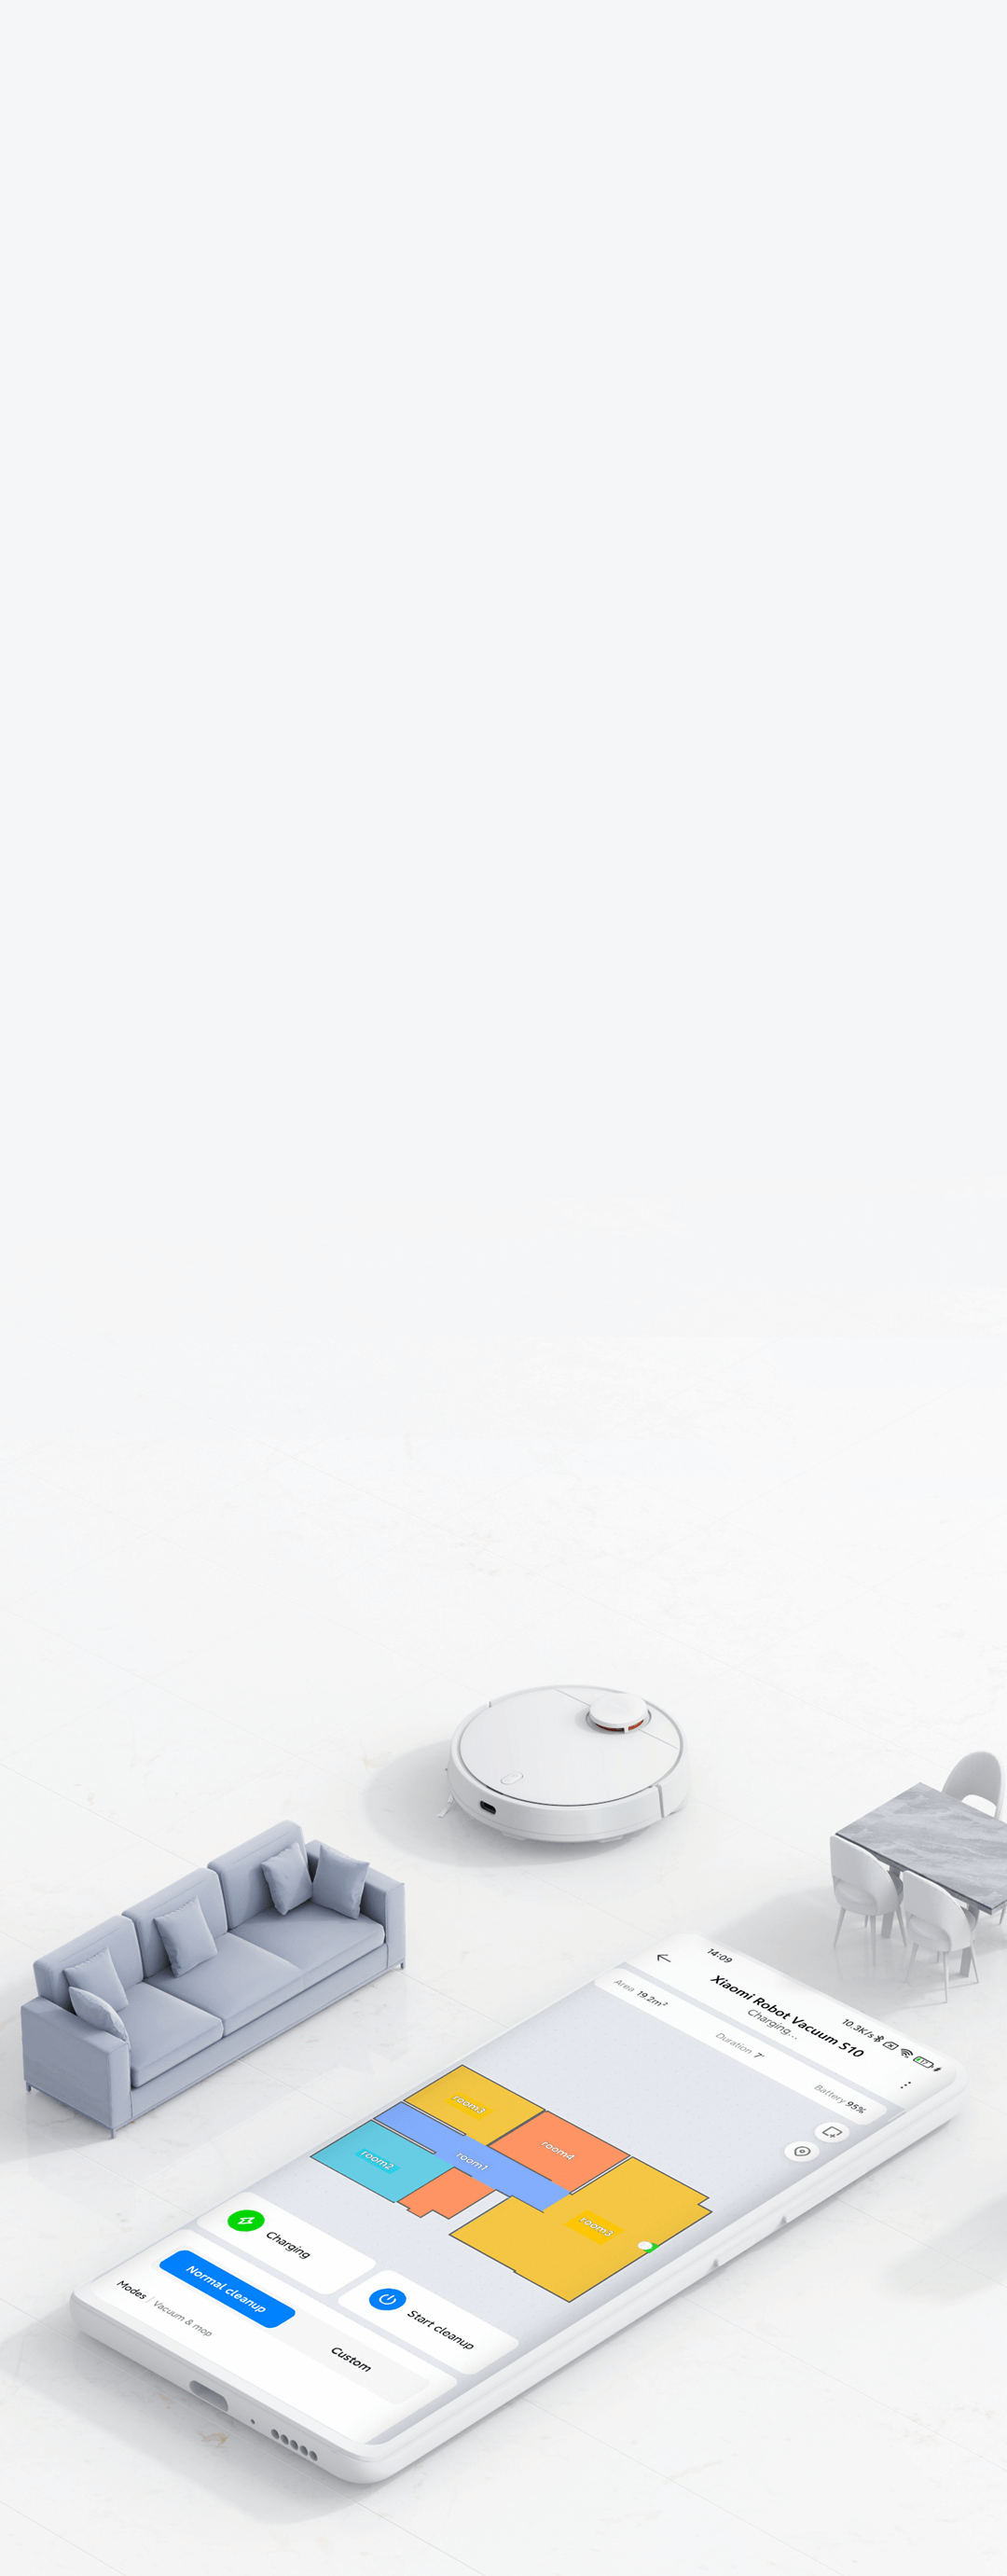 Xiaomi Robot Vacuum S10 - Xiaomi Global